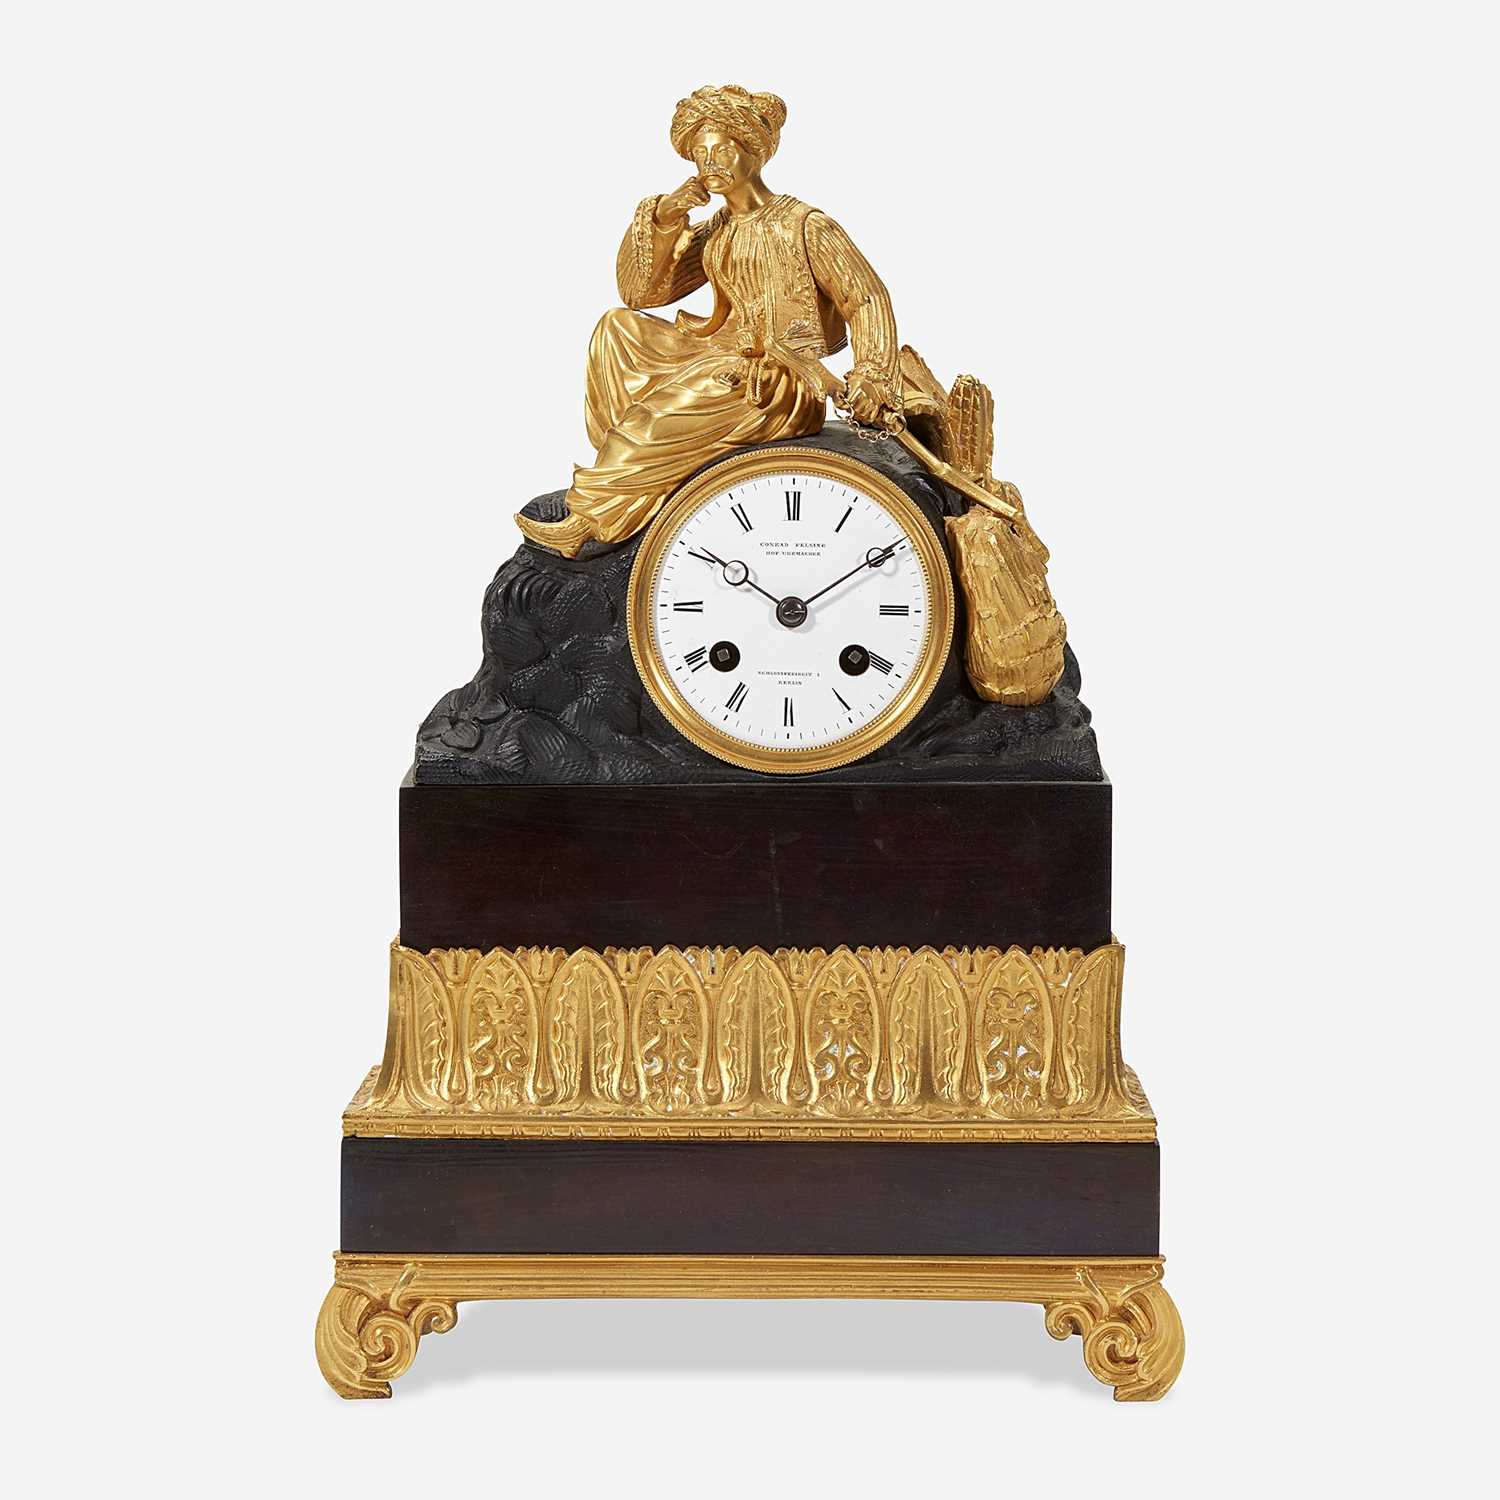 Lot 42 - A German Patinated and Gilt Bronze Mantel Clock